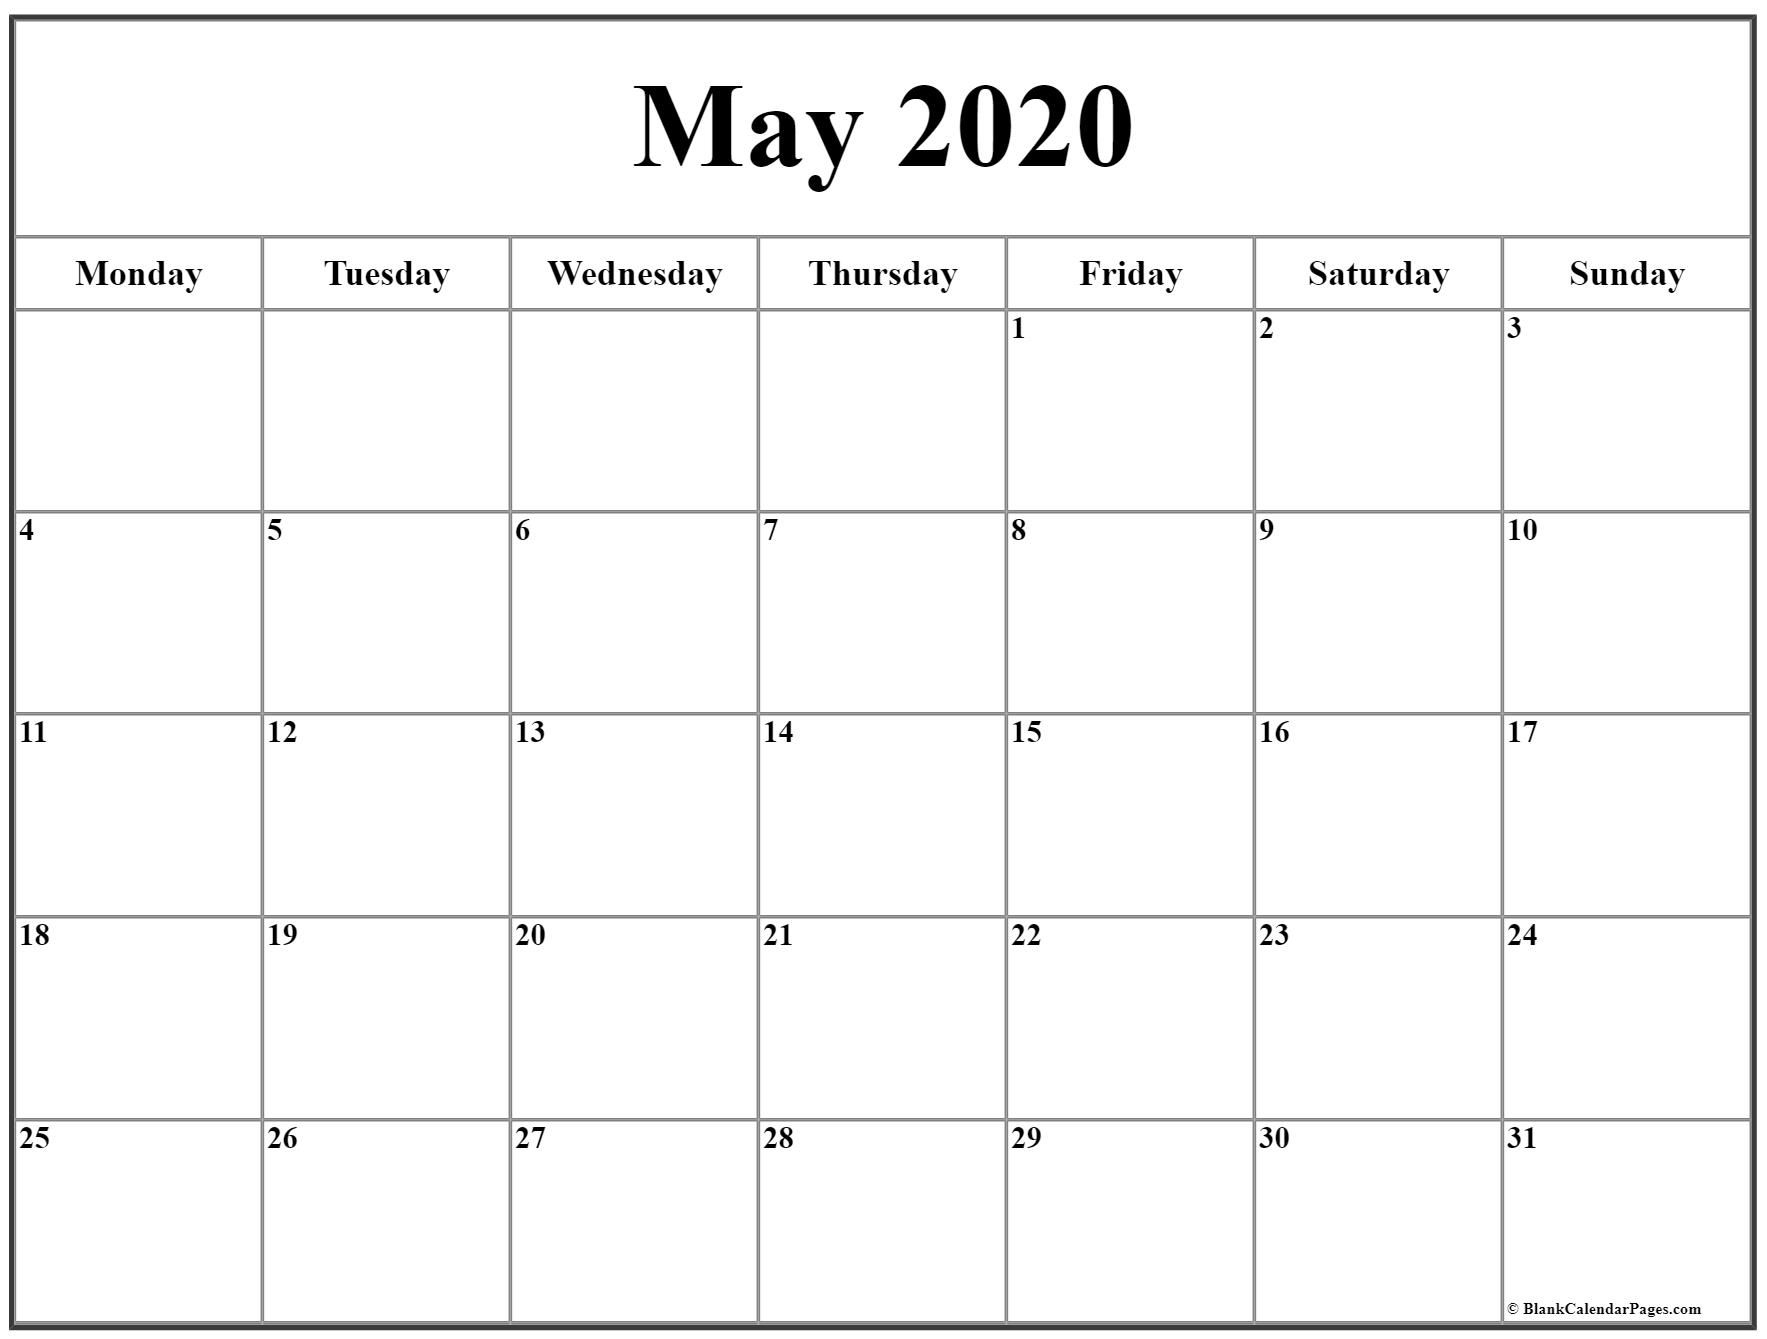 May 2020 Monday Calendar | Monday To Sunday